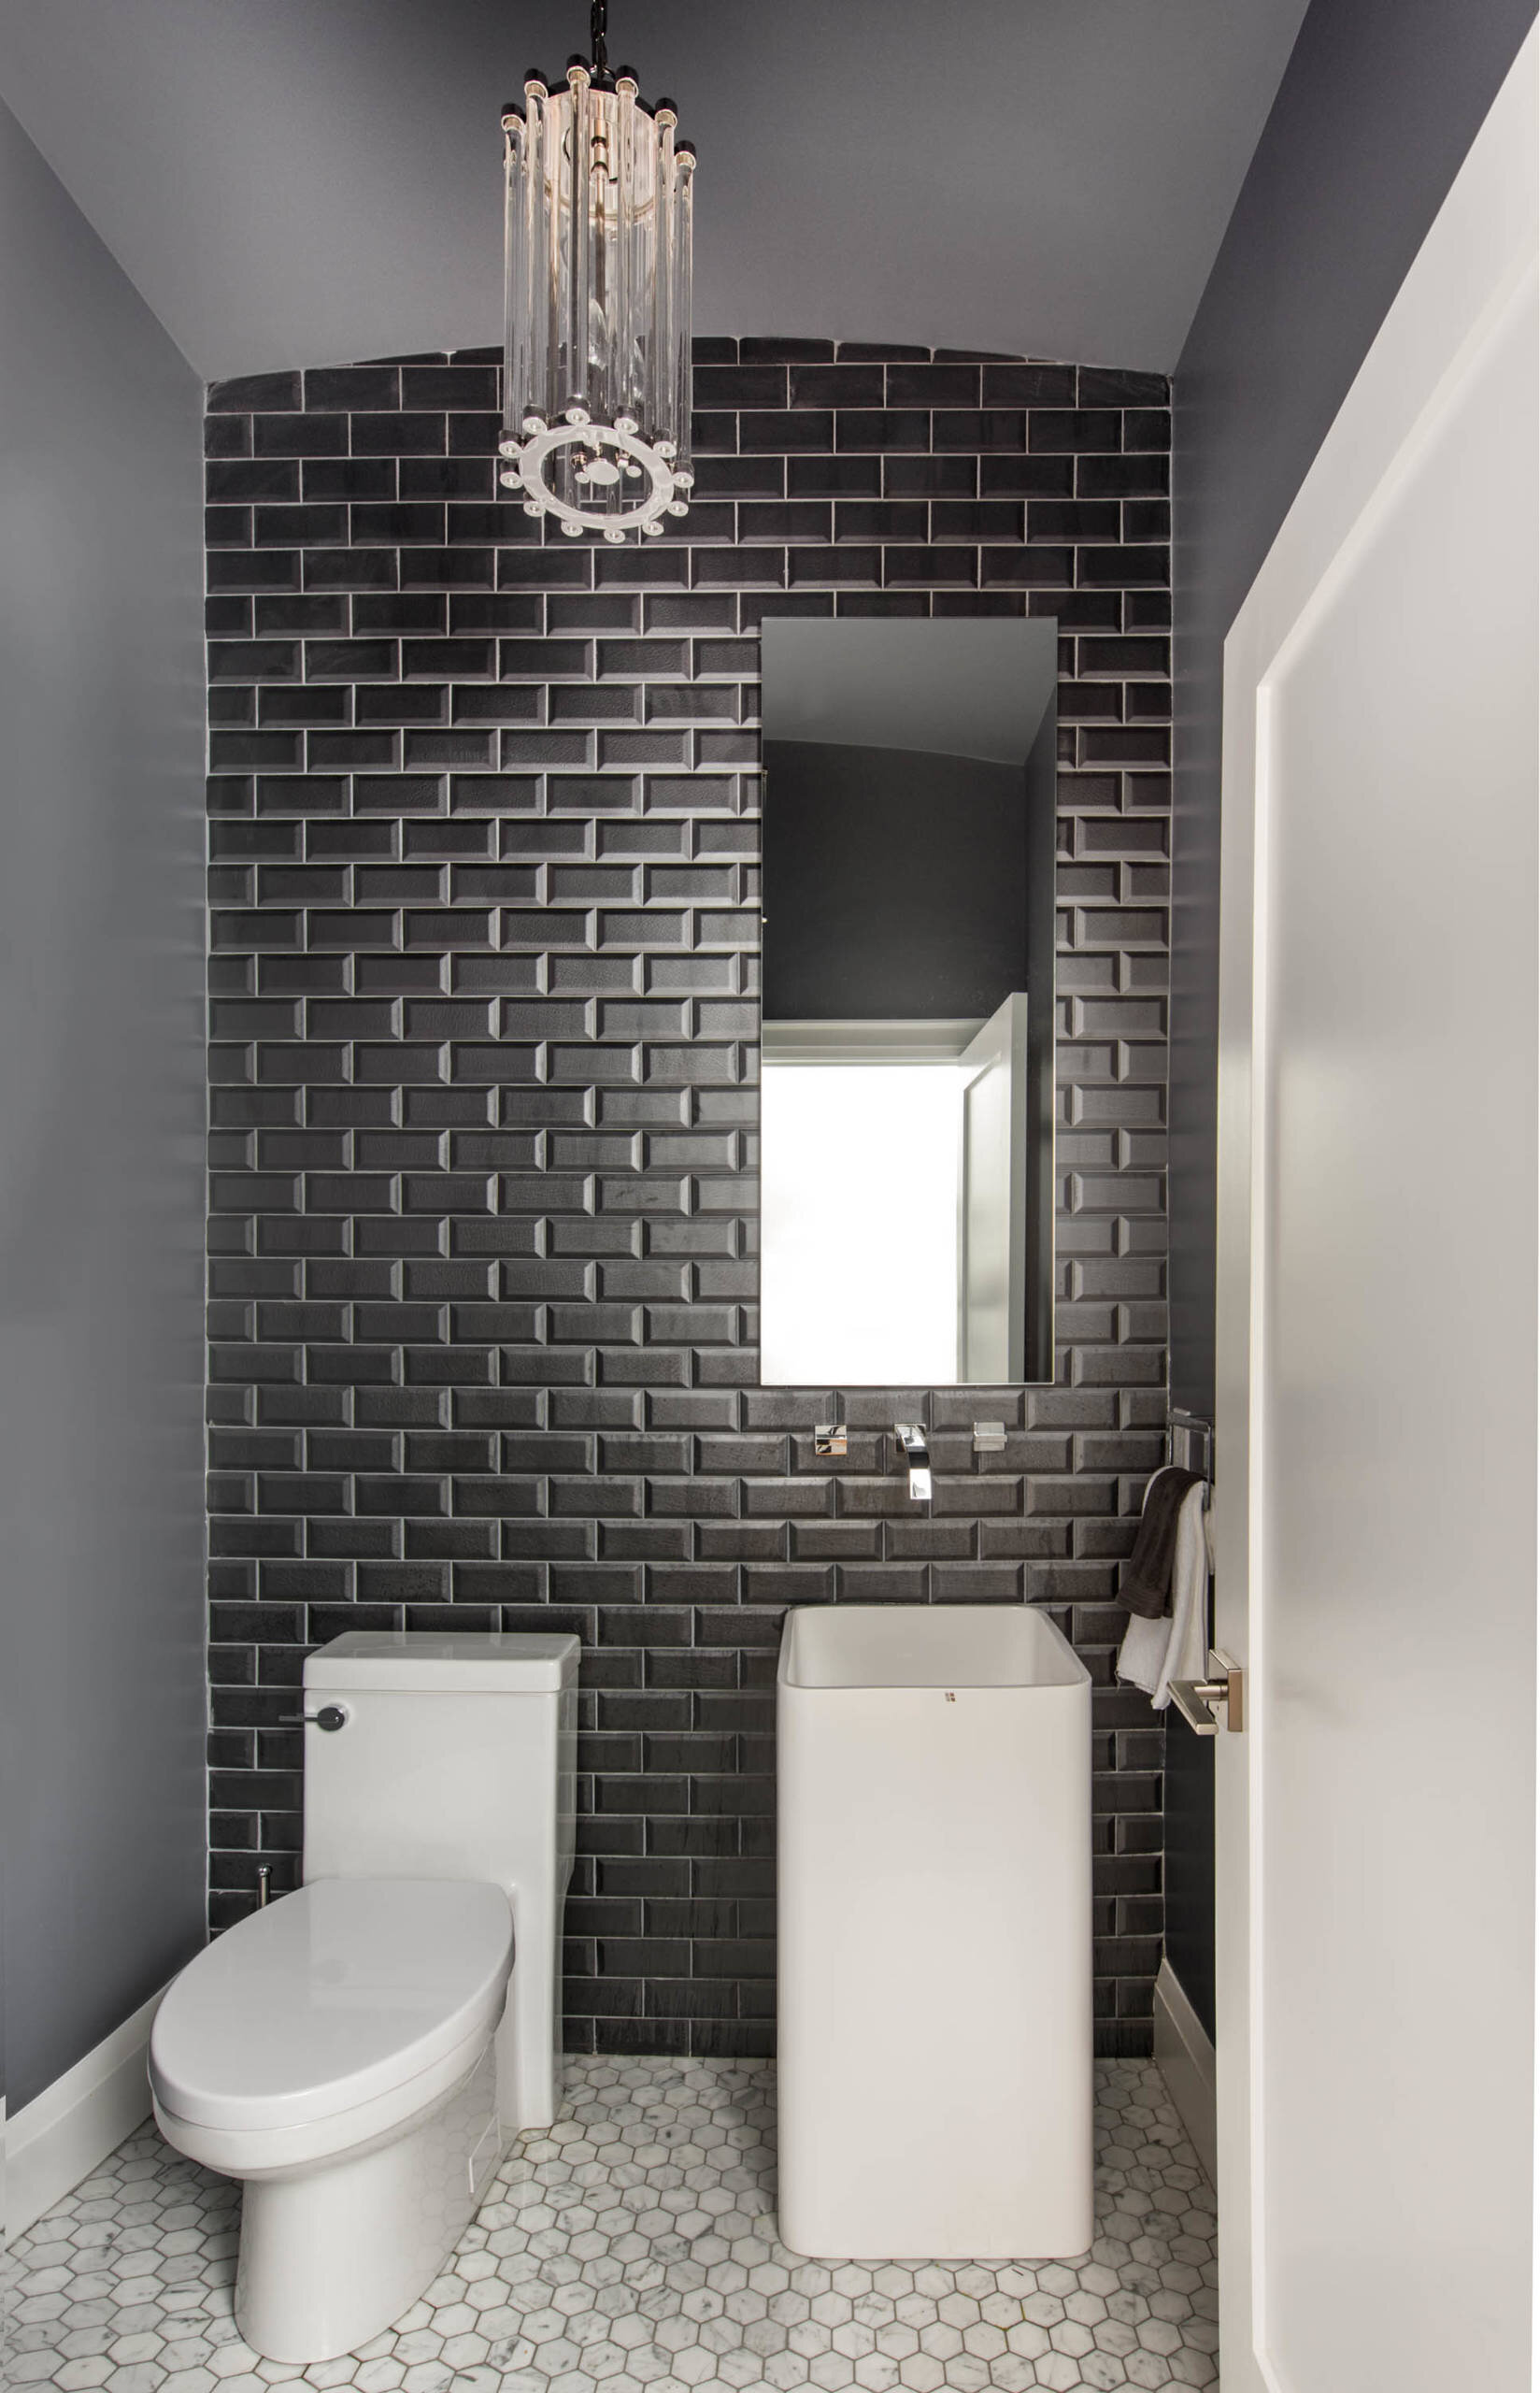 tiny powder room contemporary modern black subway tile wall mounted chrome faucet white pedestal carrara hex mosaic